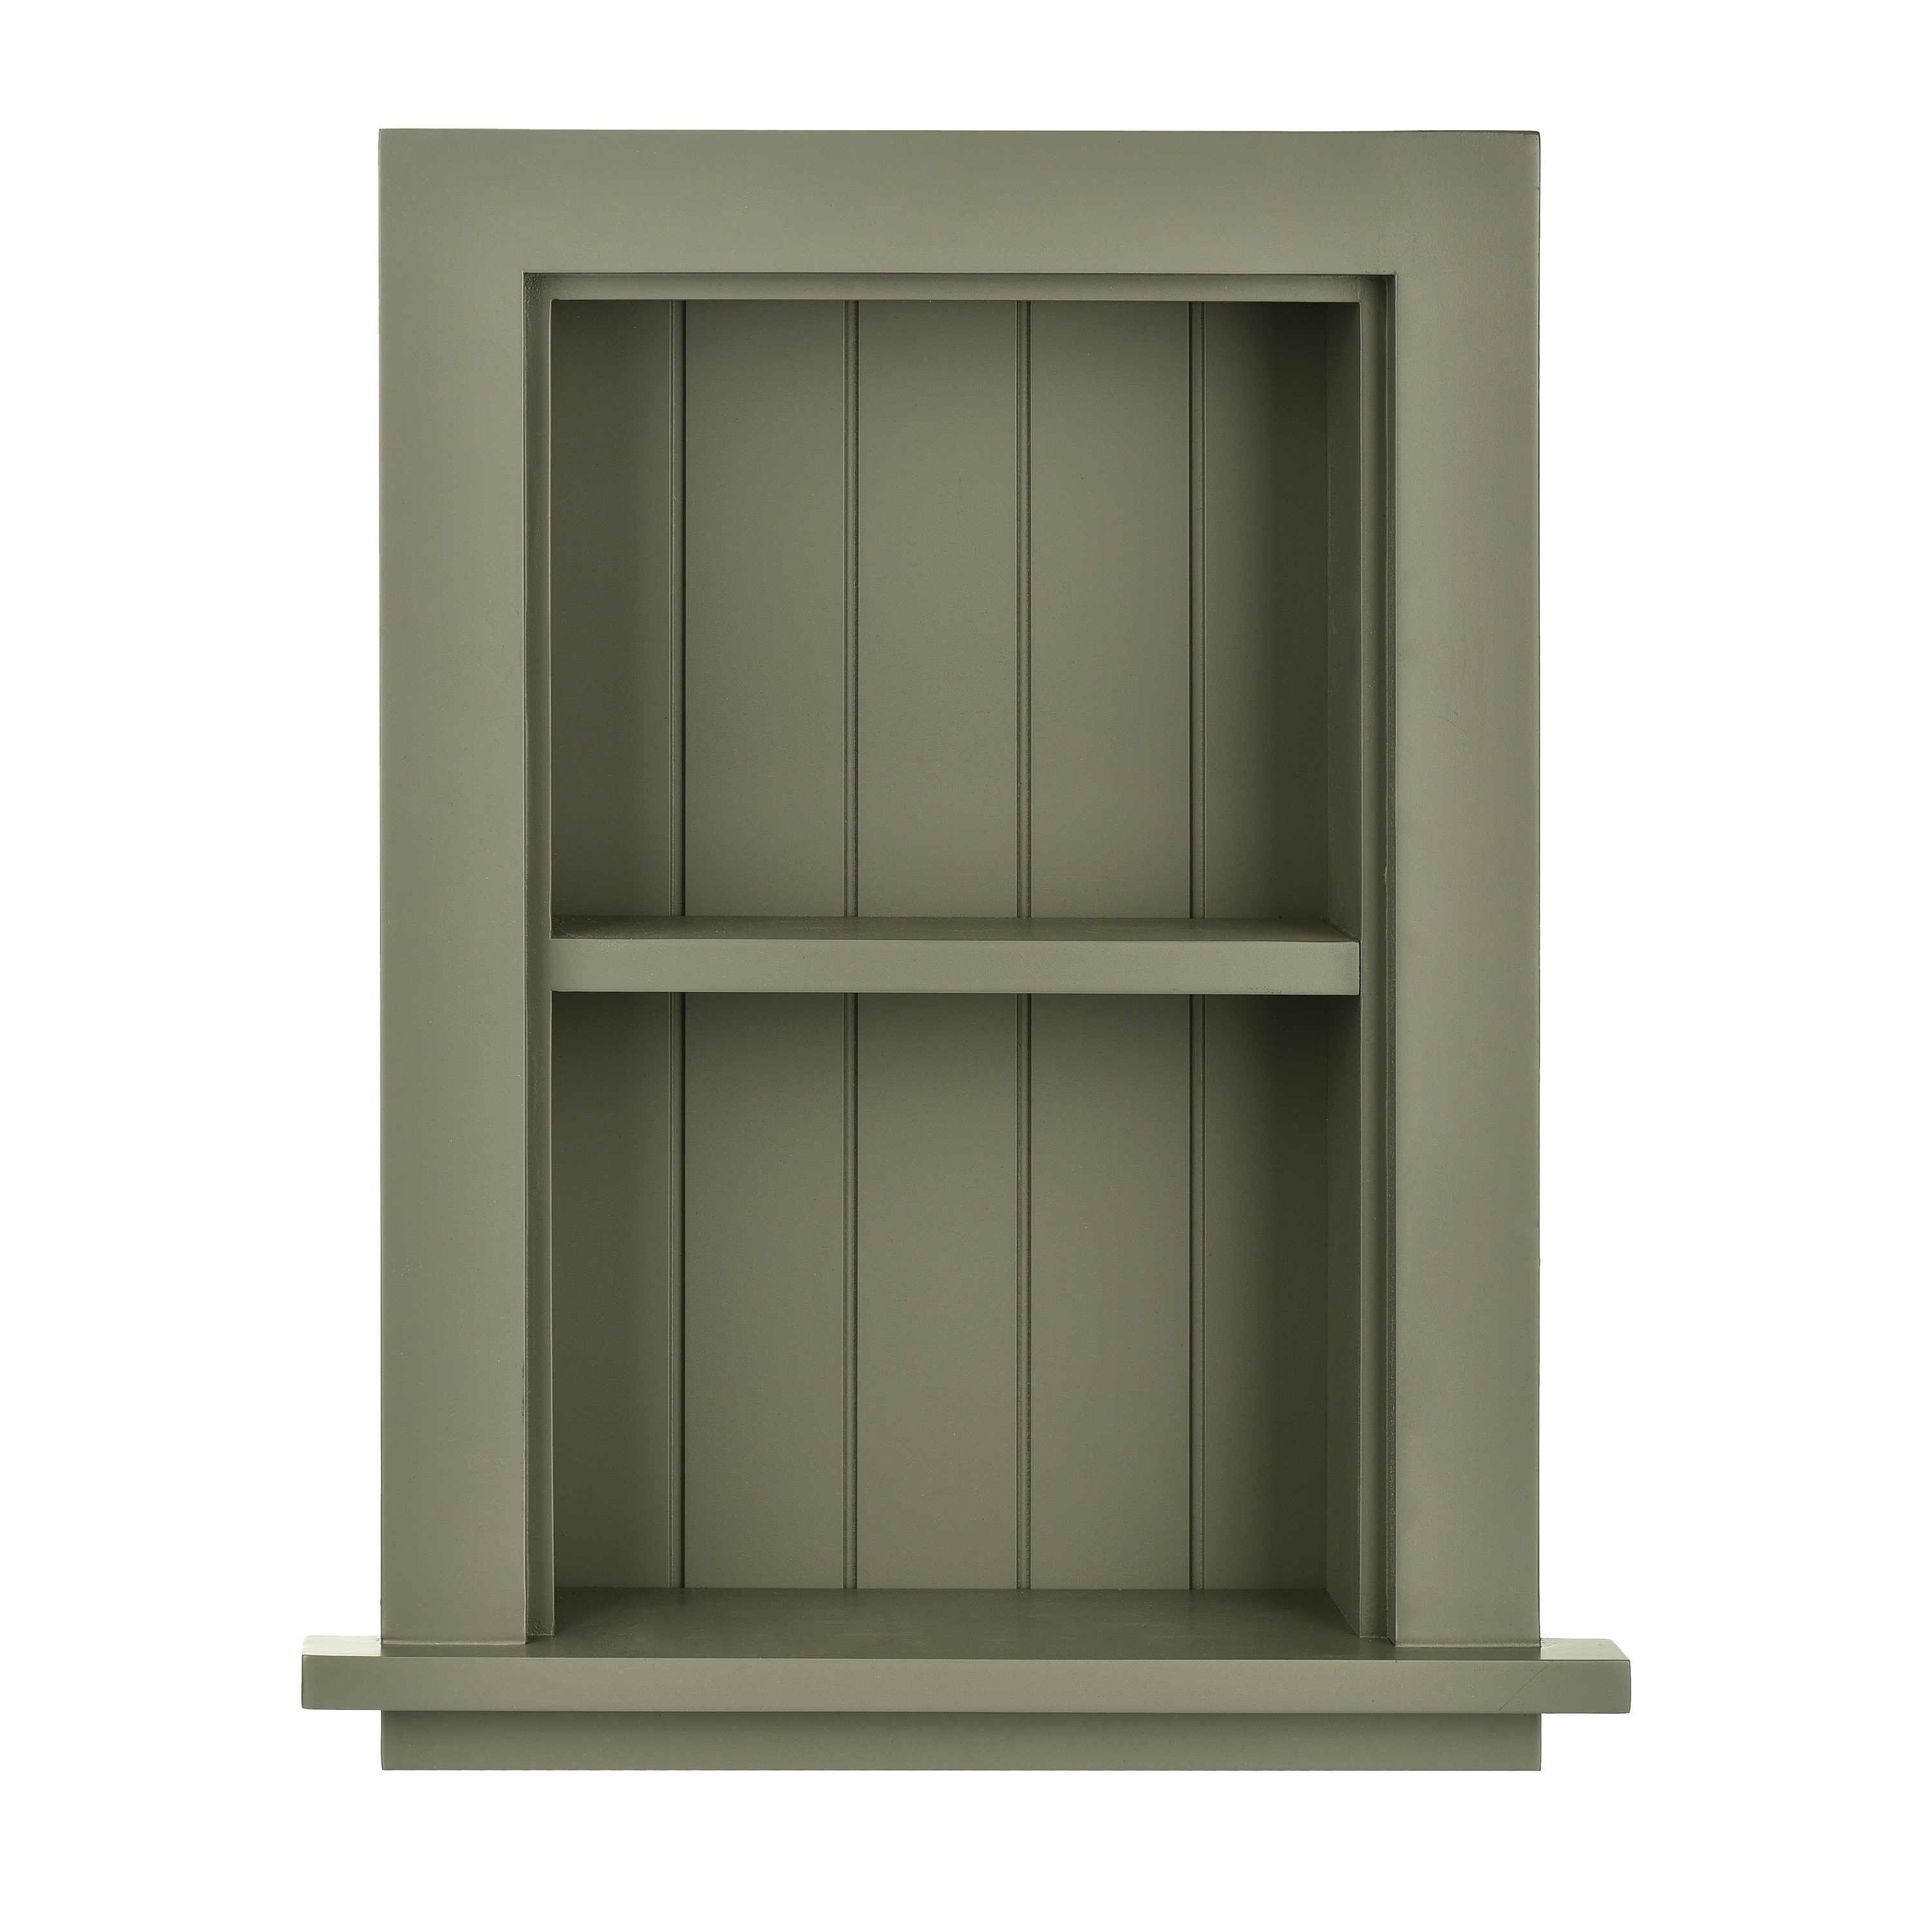 AdirHome White Wood Home Decor Bathroom Recessed Storage Wall Cabinet With Shelf 